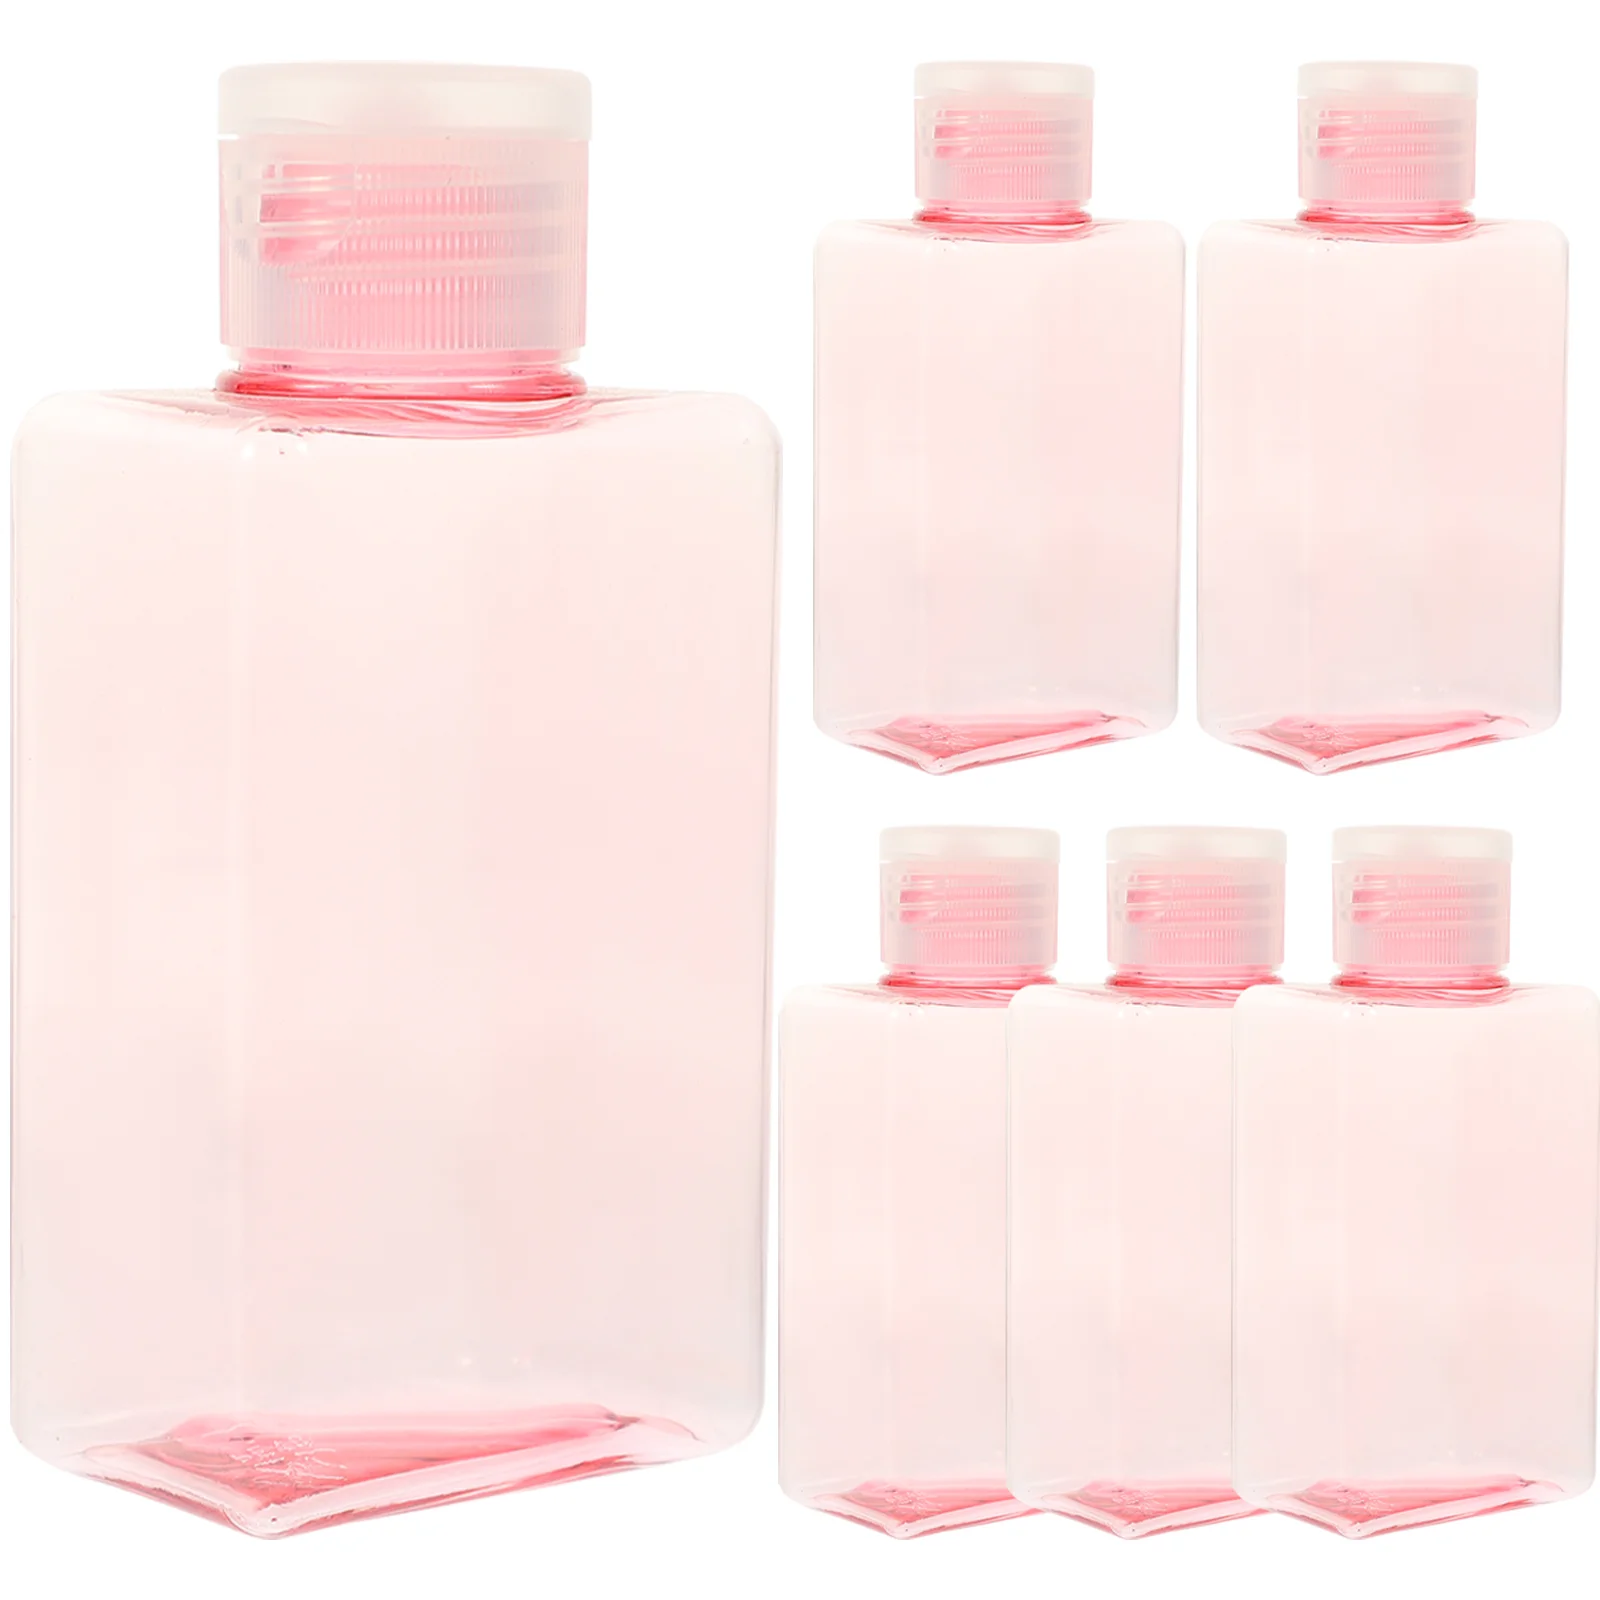 6Pcs Toiletry Shampoo Conditioner Travel Bottles Travel Bottles Plastic Travel Bottles for Travel Outdoor Storage